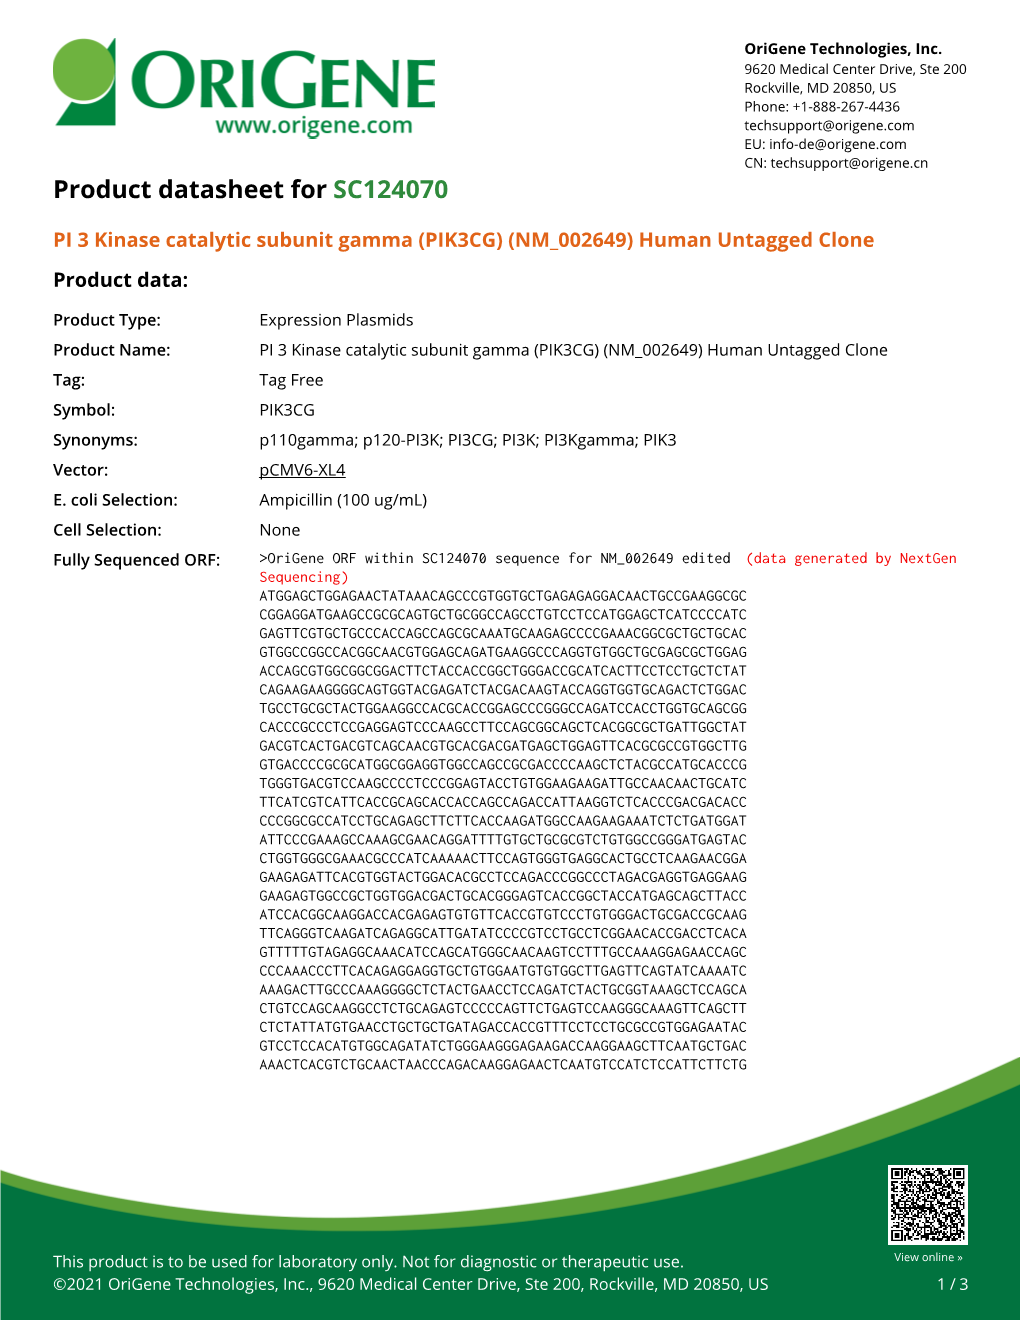 (PIK3CG) (NM 002649) Human Untagged Clone Product Data